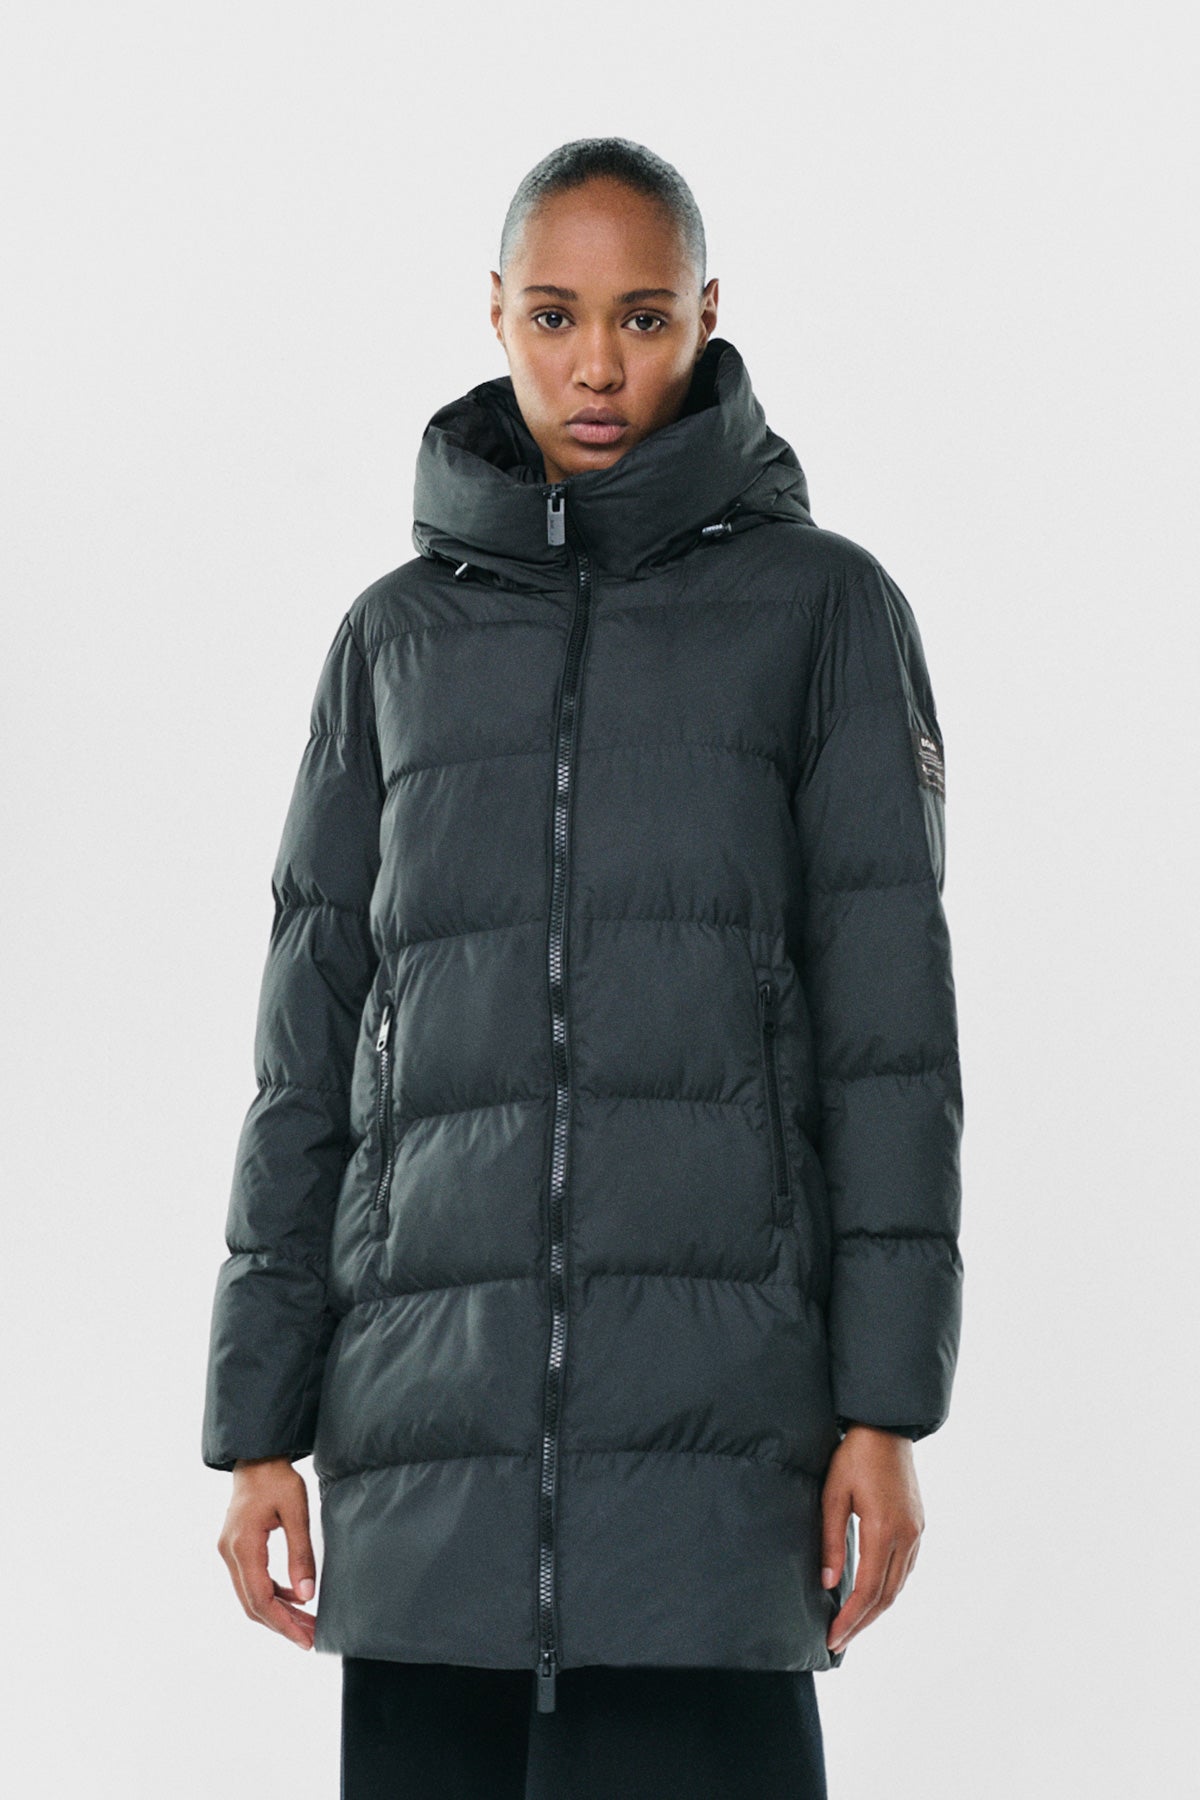 Ecoalf Manliealf Jacket - Abrigo Mujer